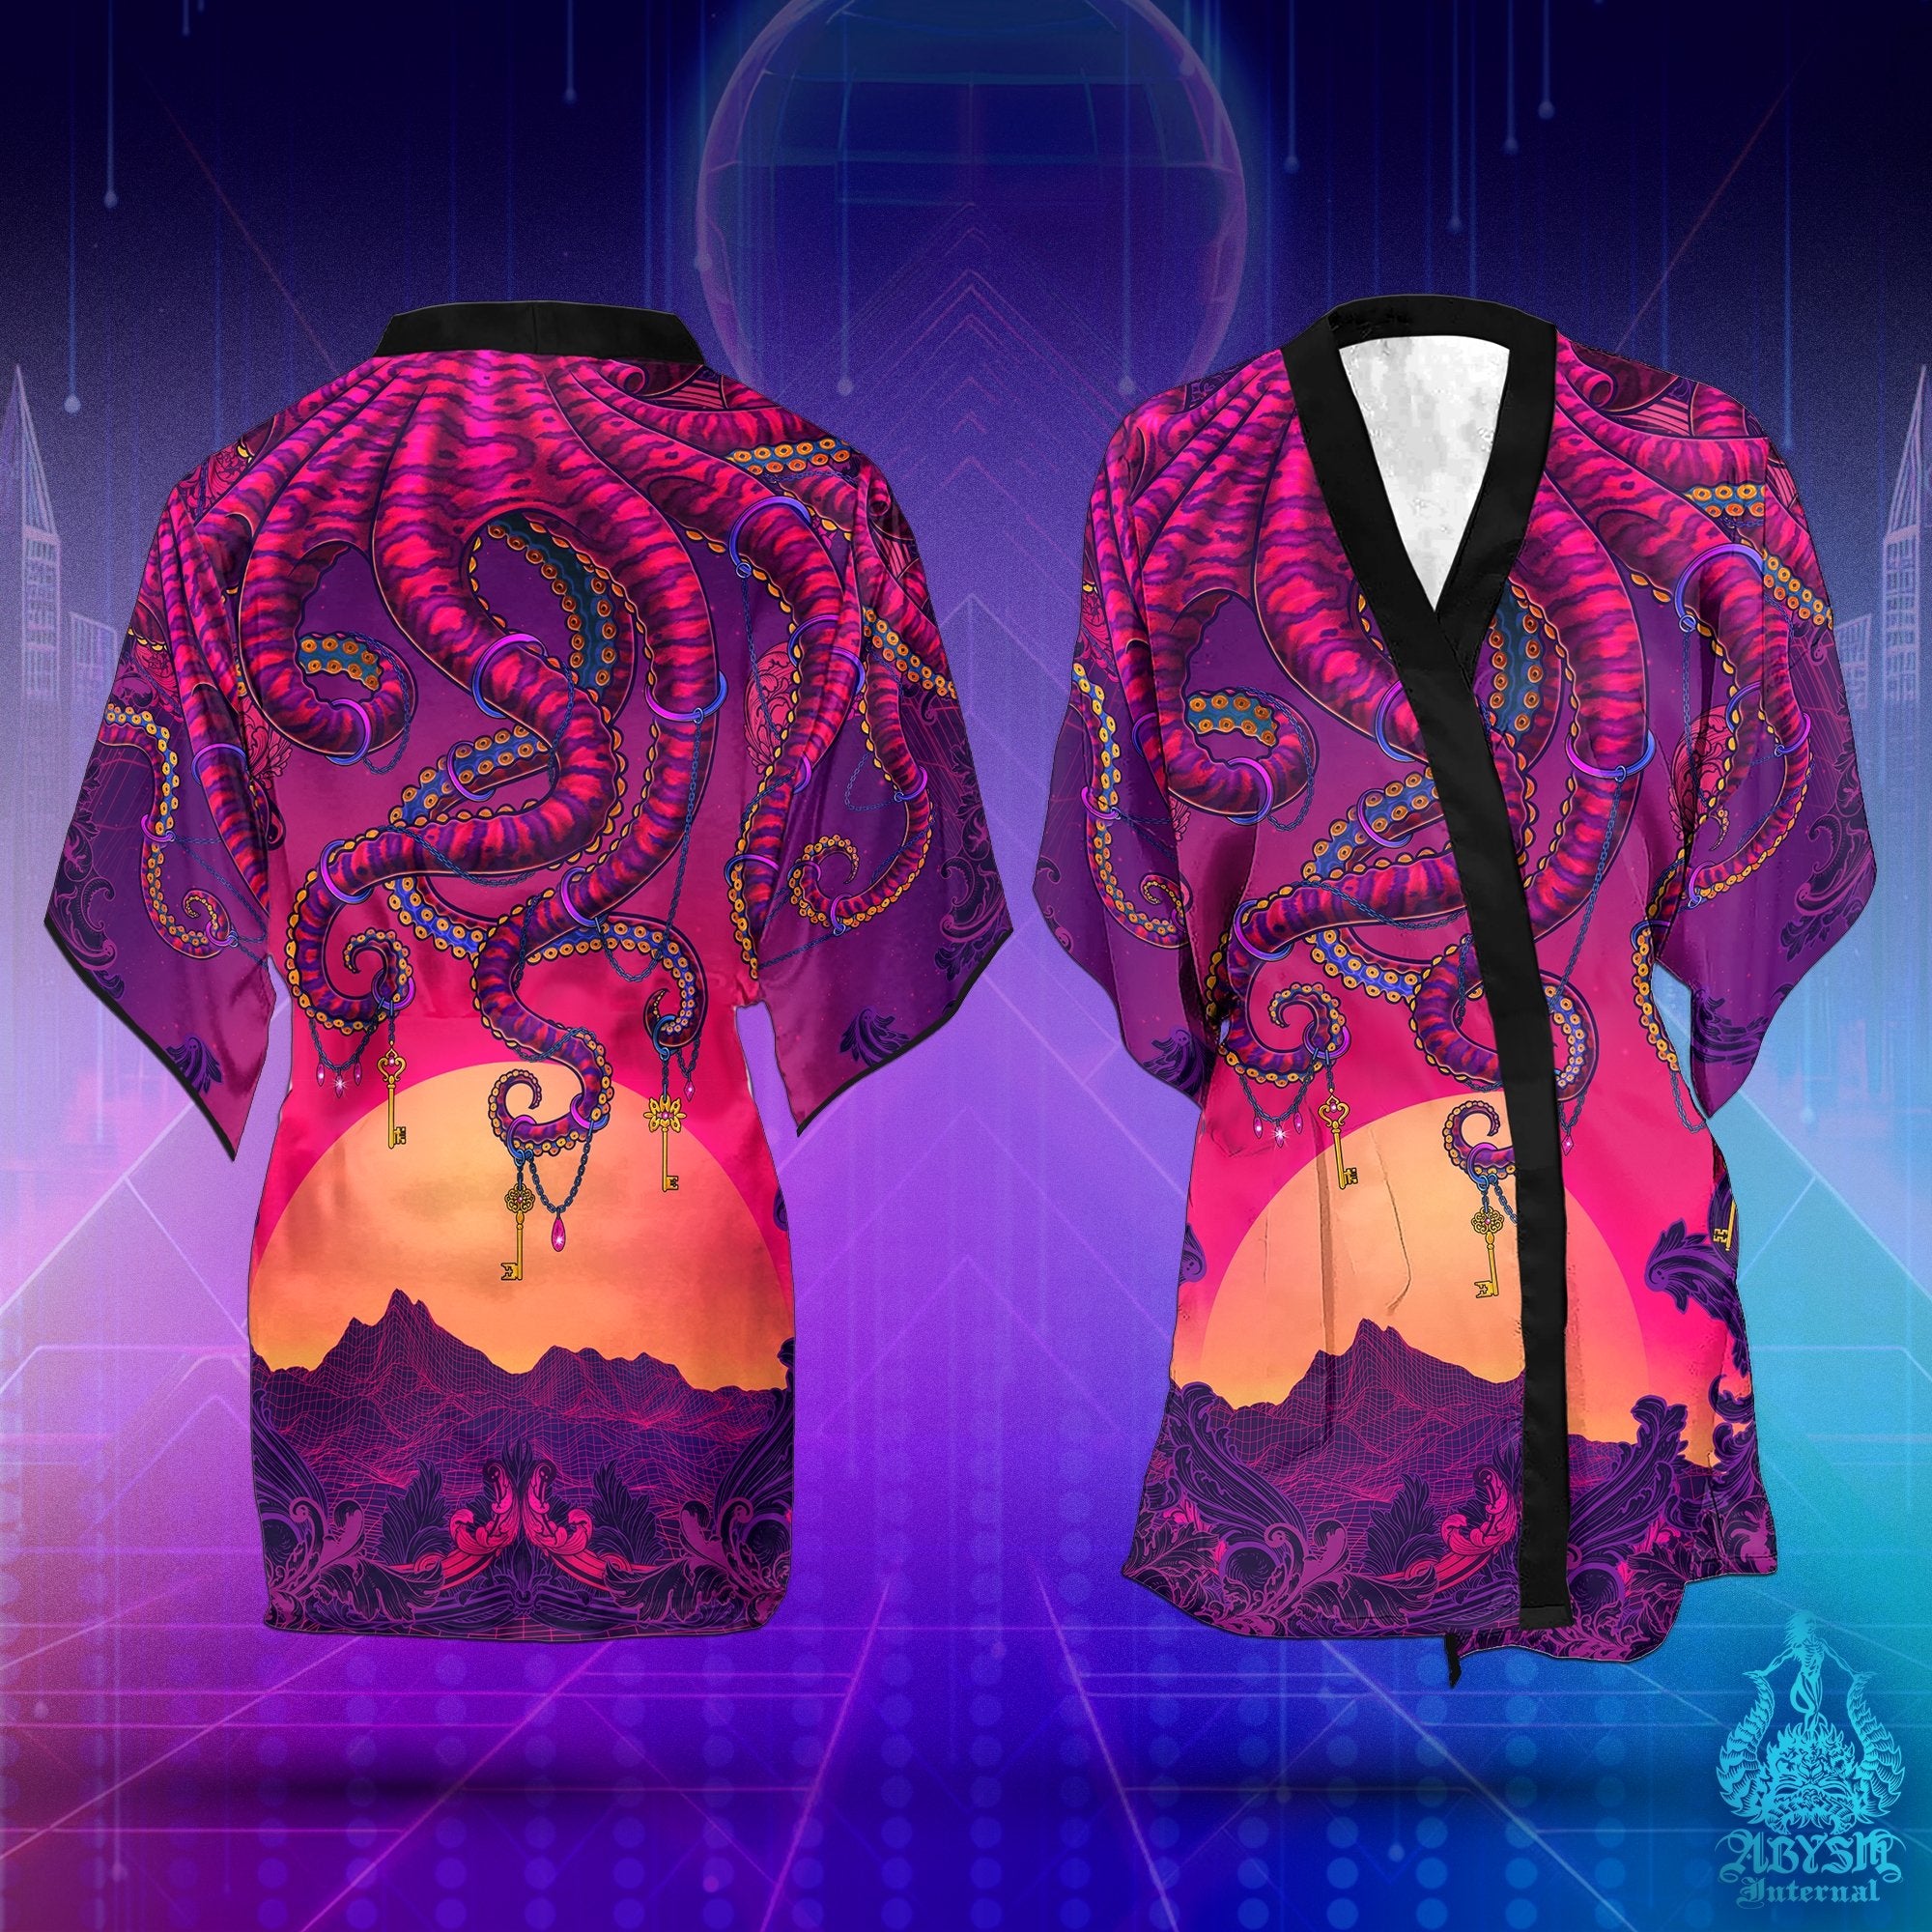 Abysm Internal Demon Short Kimono Robe